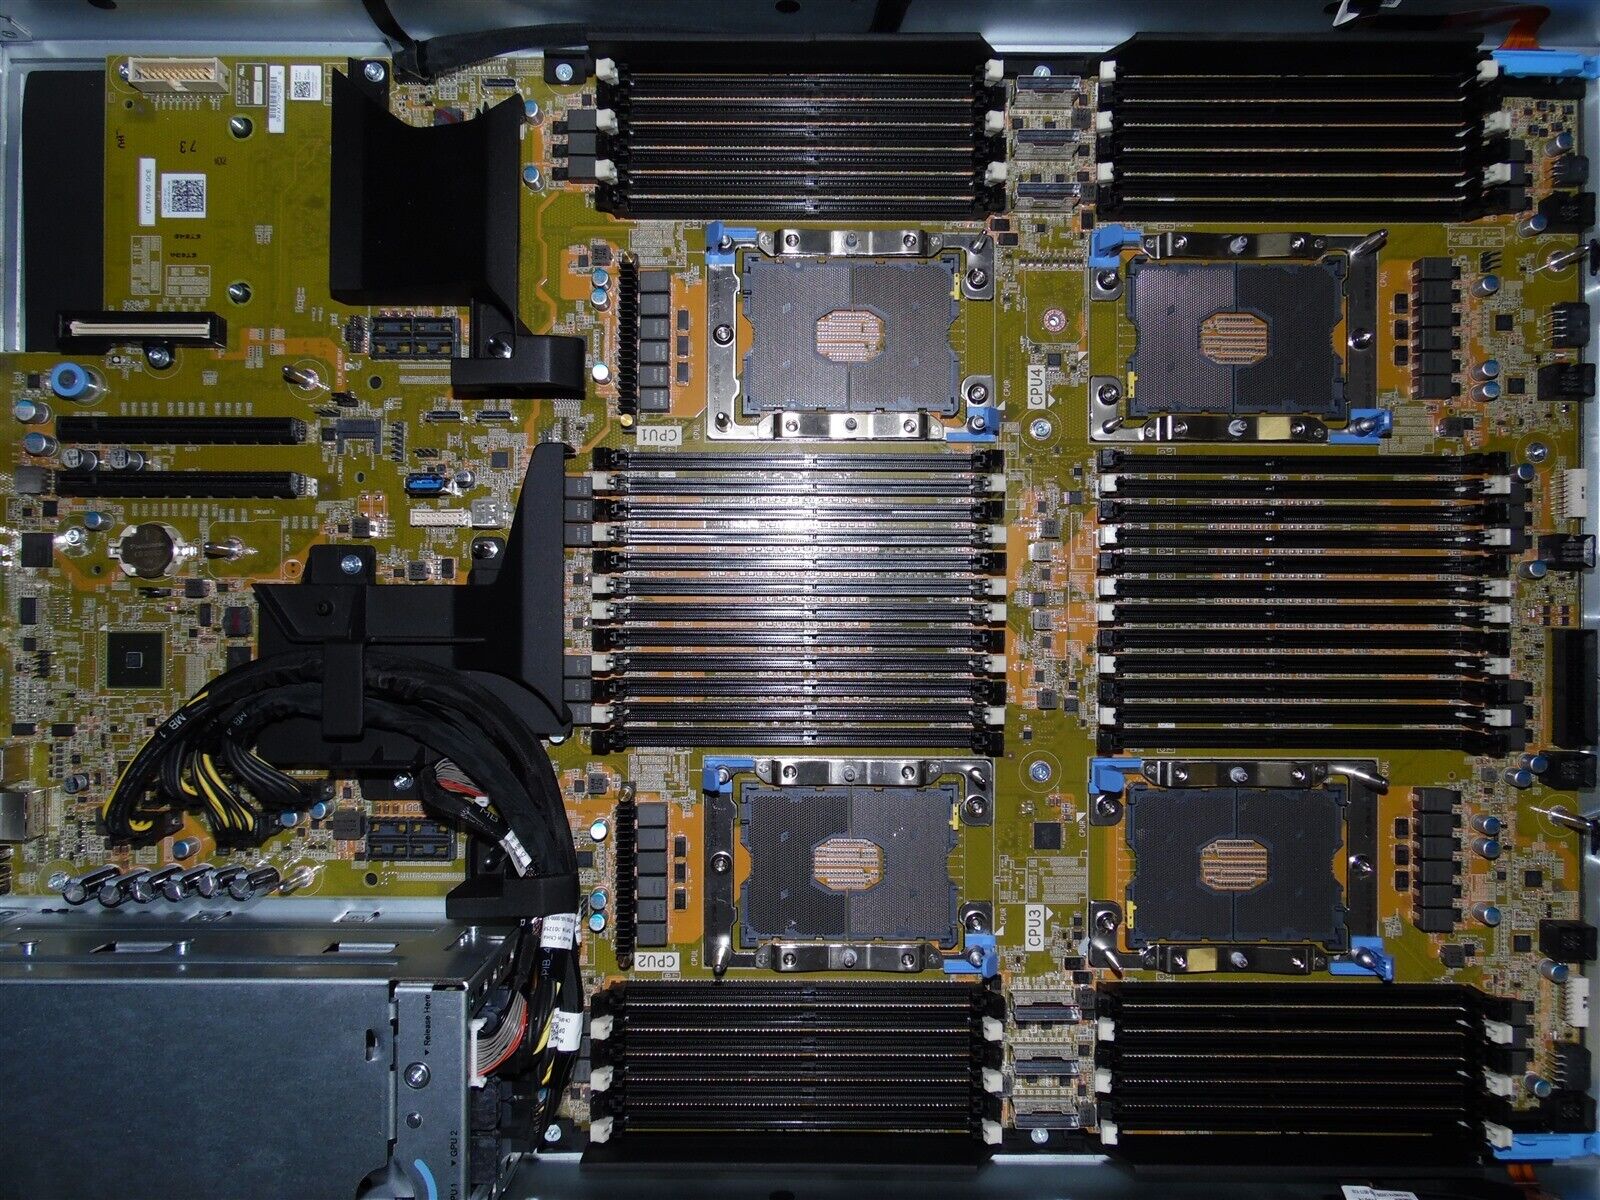 DELL EMC POWEREDGE R840 SERVER MOTHERBOARD SYSTEM MAIN BOARD 4 CPU SOCKETS